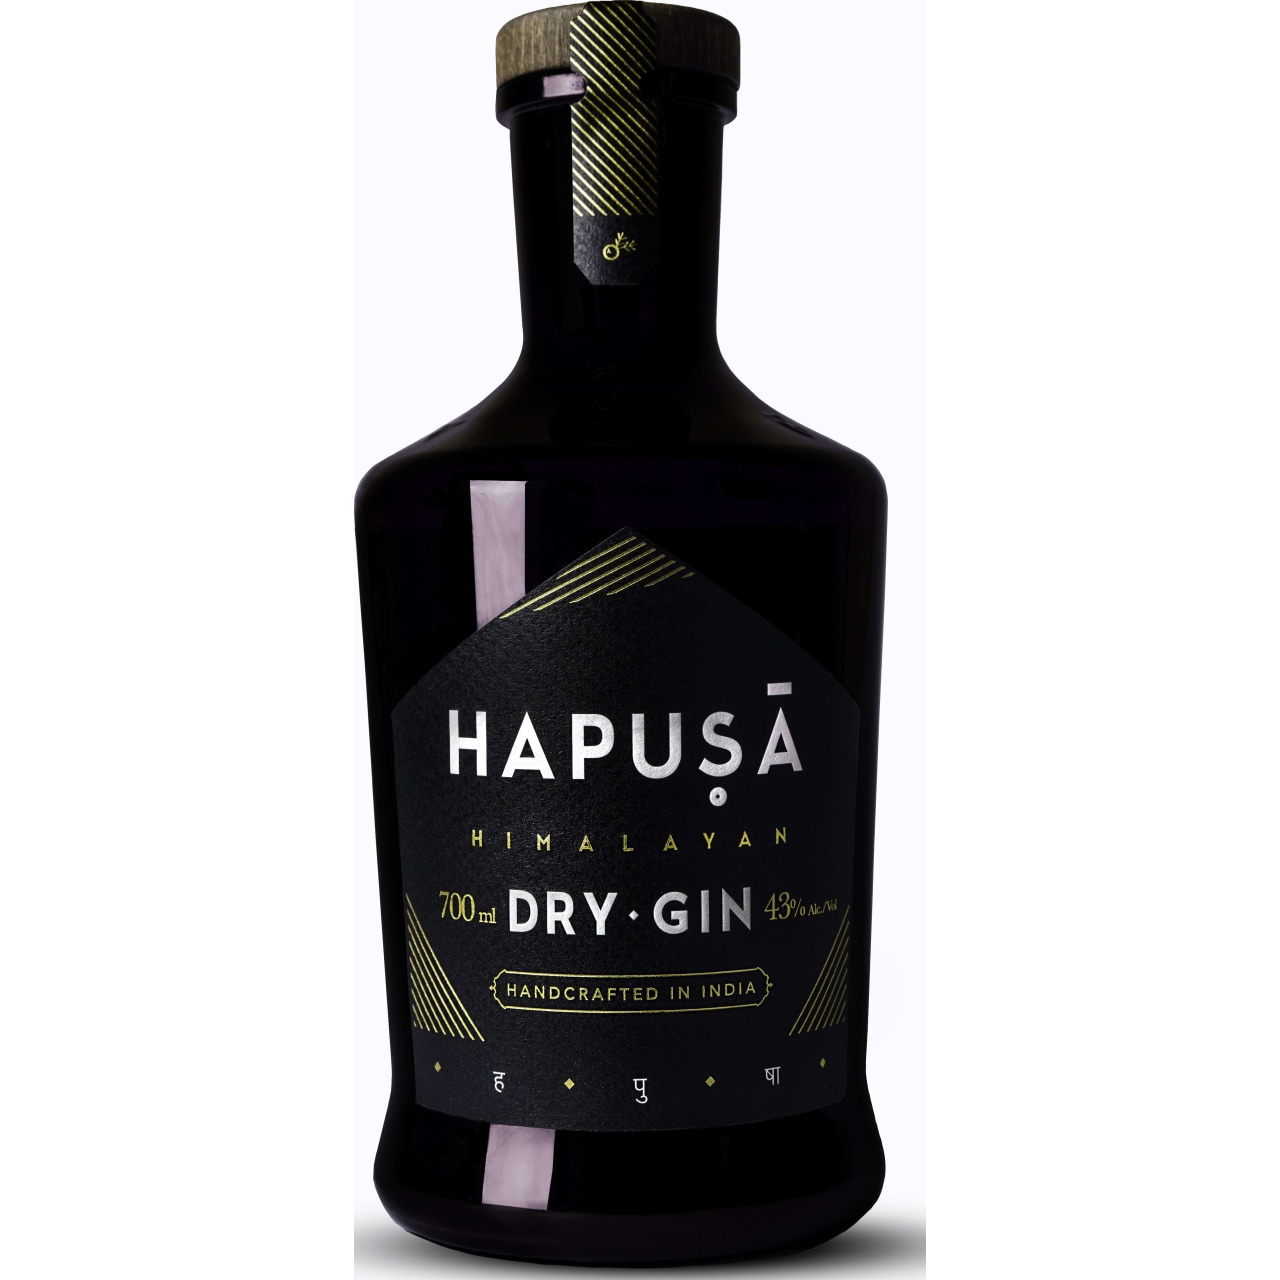 Hapusa™ Himalayan Dry Gin